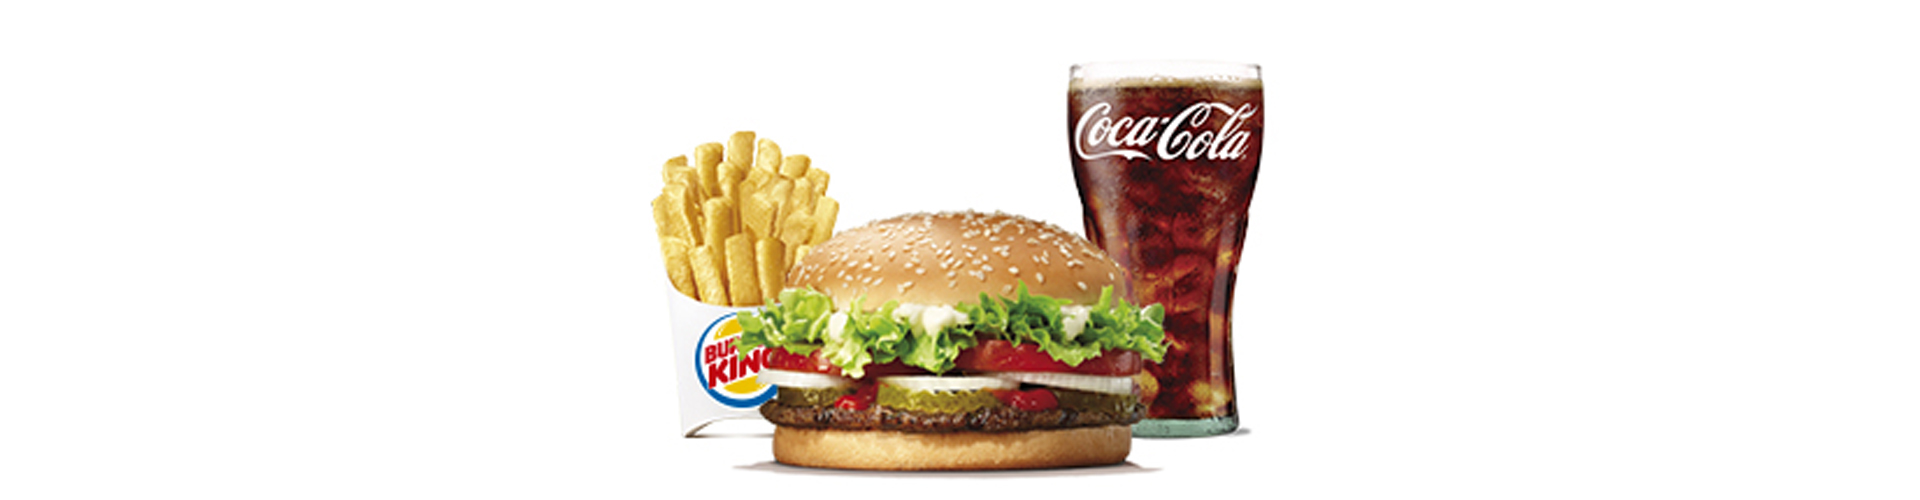 menu-whopper-burgerking-40001707